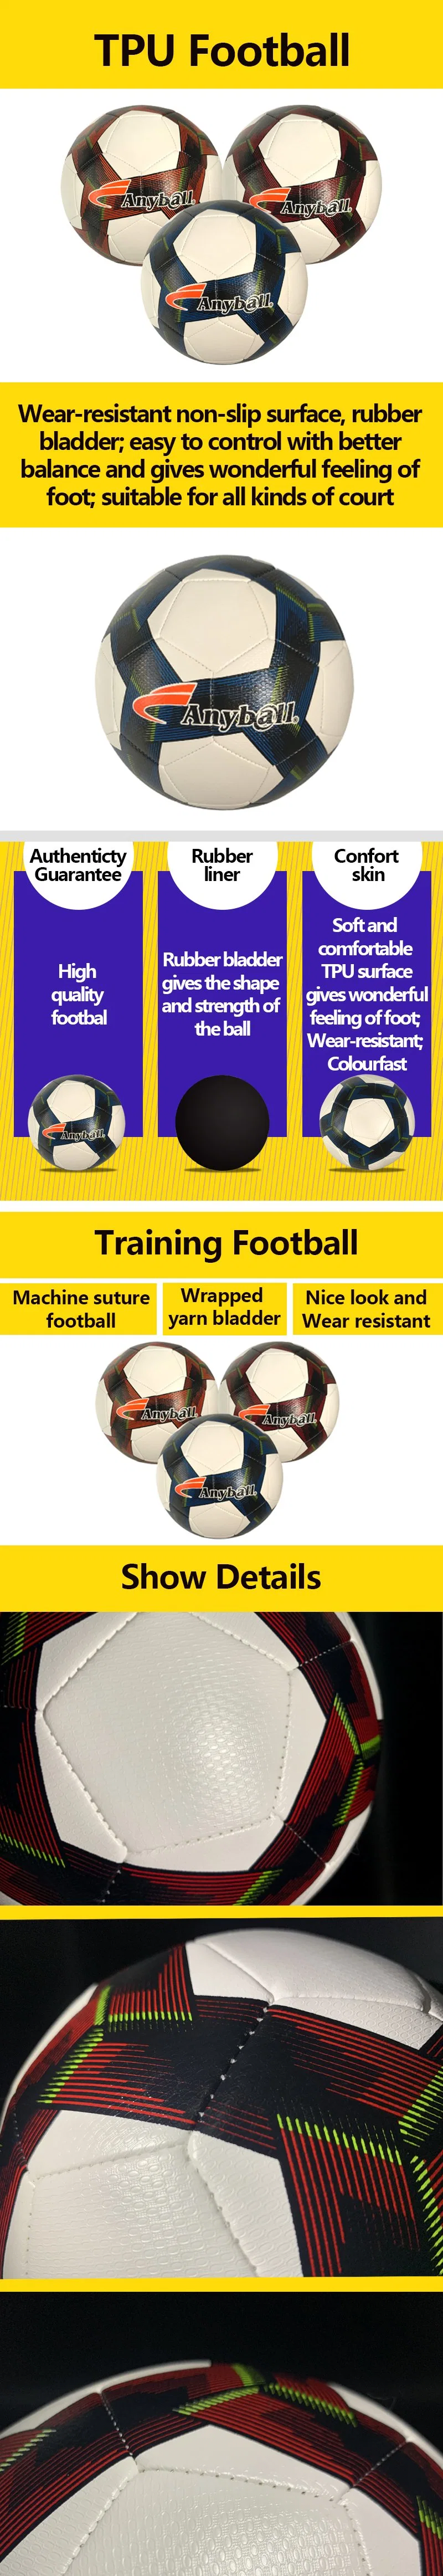 Professional Football Soccer Ball TPU Size 5 Team Match Training Balls